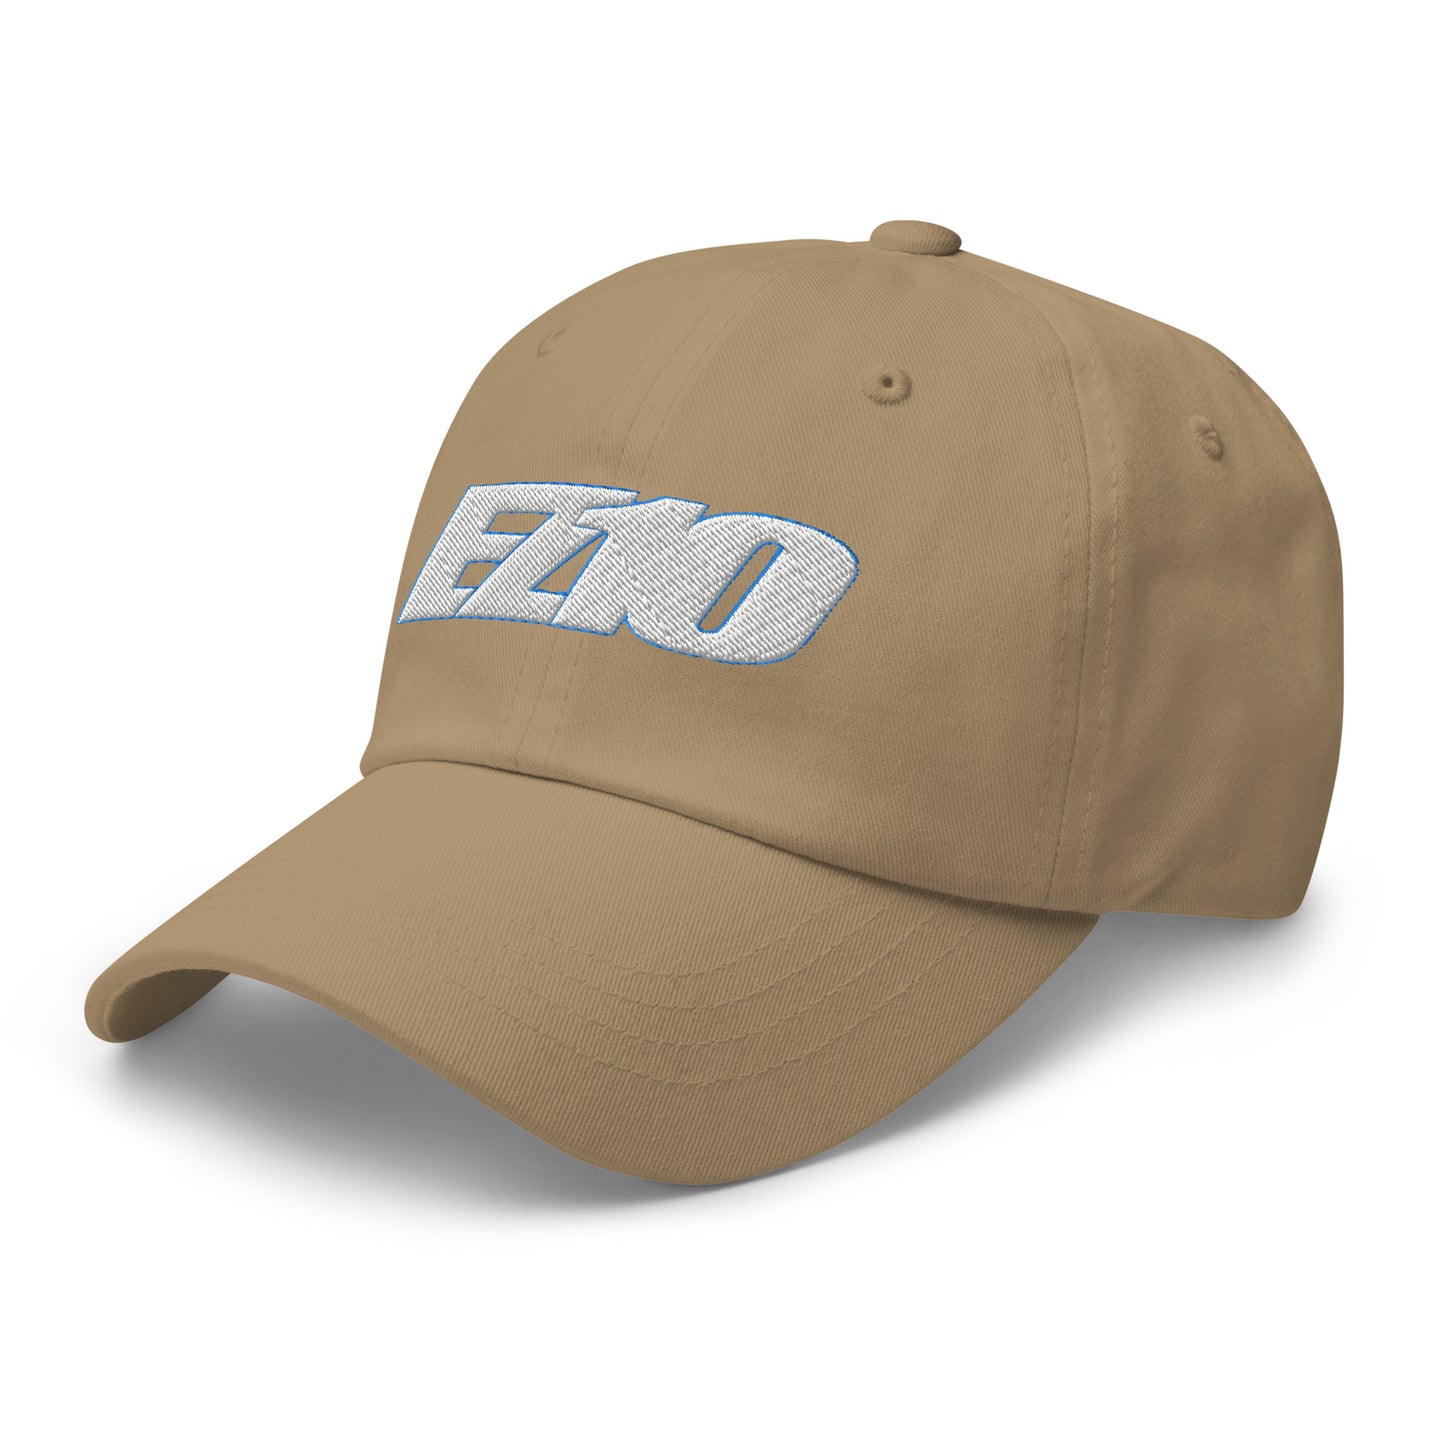 EZ10 "Dad hat"